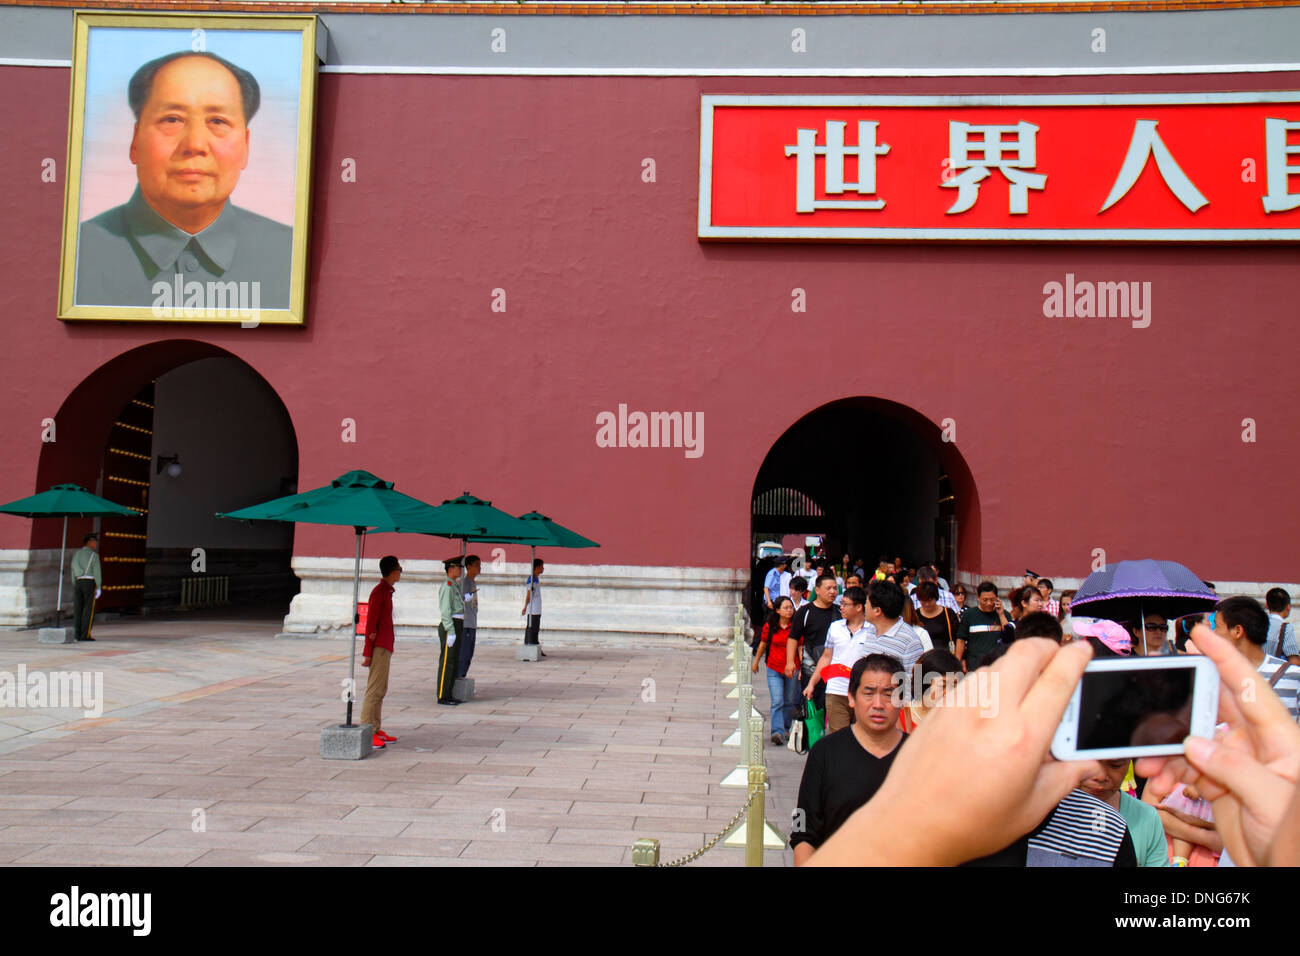 Beijing China,Chinese,Dongcheng District,Chang'an Avenue,Tian'anmen,Tiananmen,Imperial City,Chinese characters hànzì pinyin,gate,Mao Zedong portrait,A Stock Photo